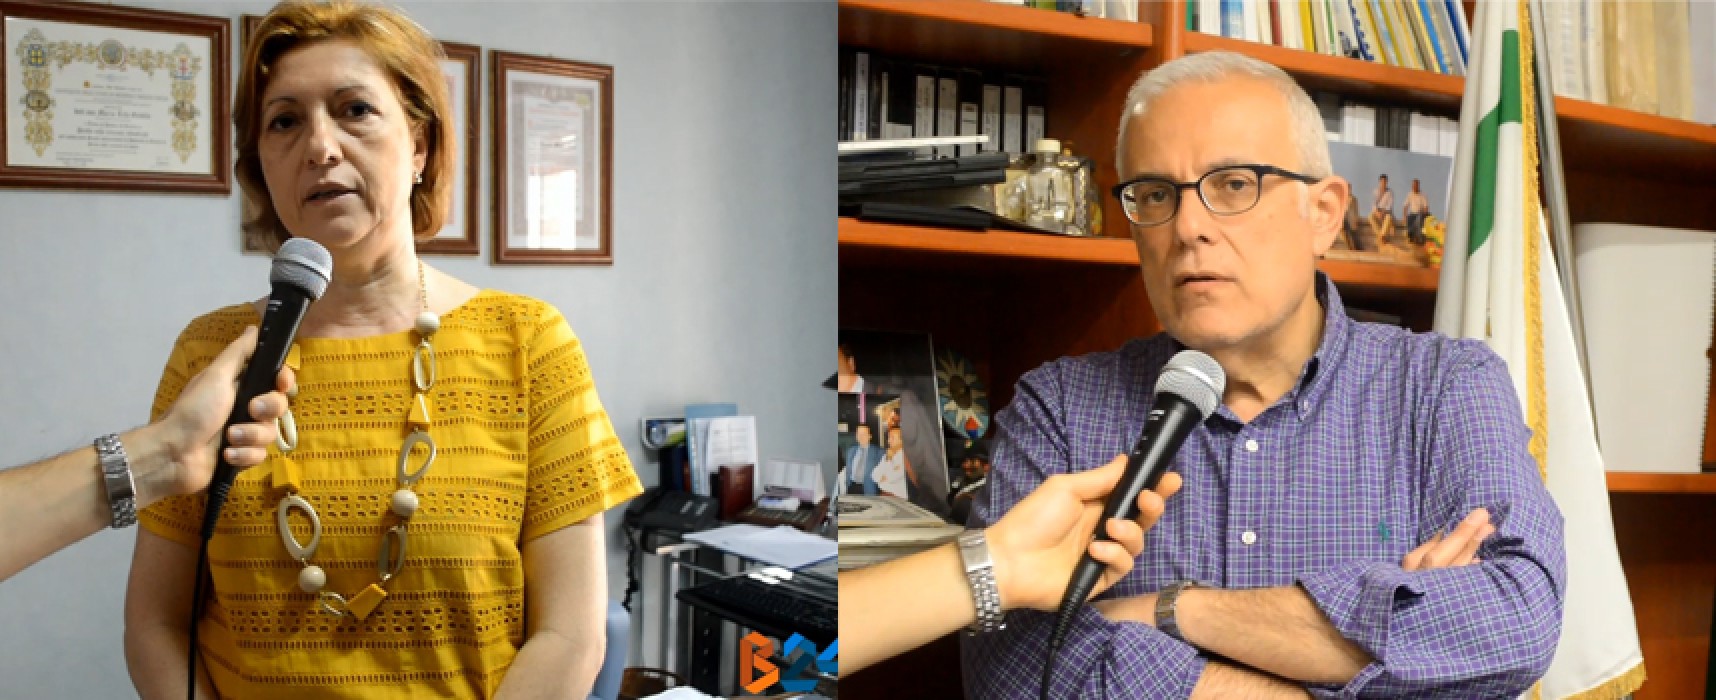 Elezioni Europee 2014, intervista a Francesco Amoruso e a Tonia Spina